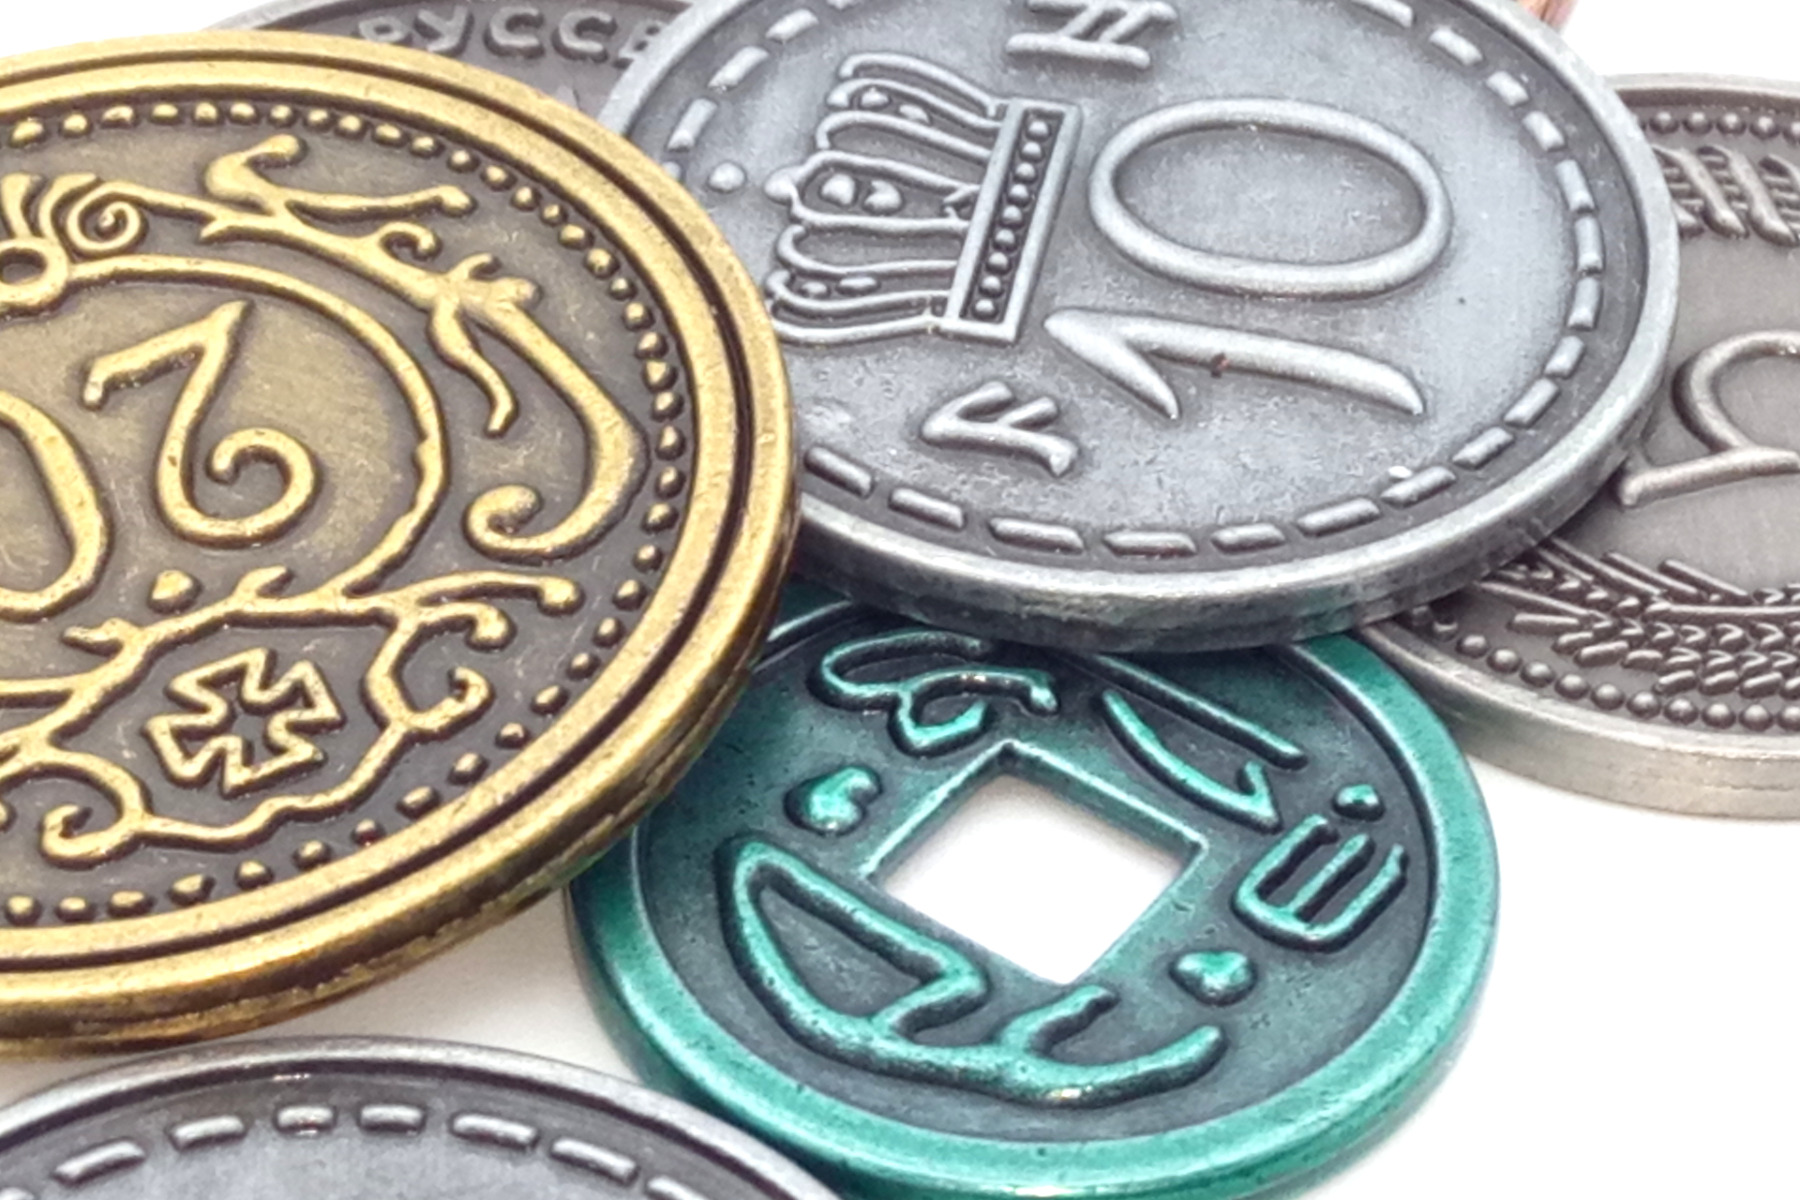 Scythe Metallmünzen Set